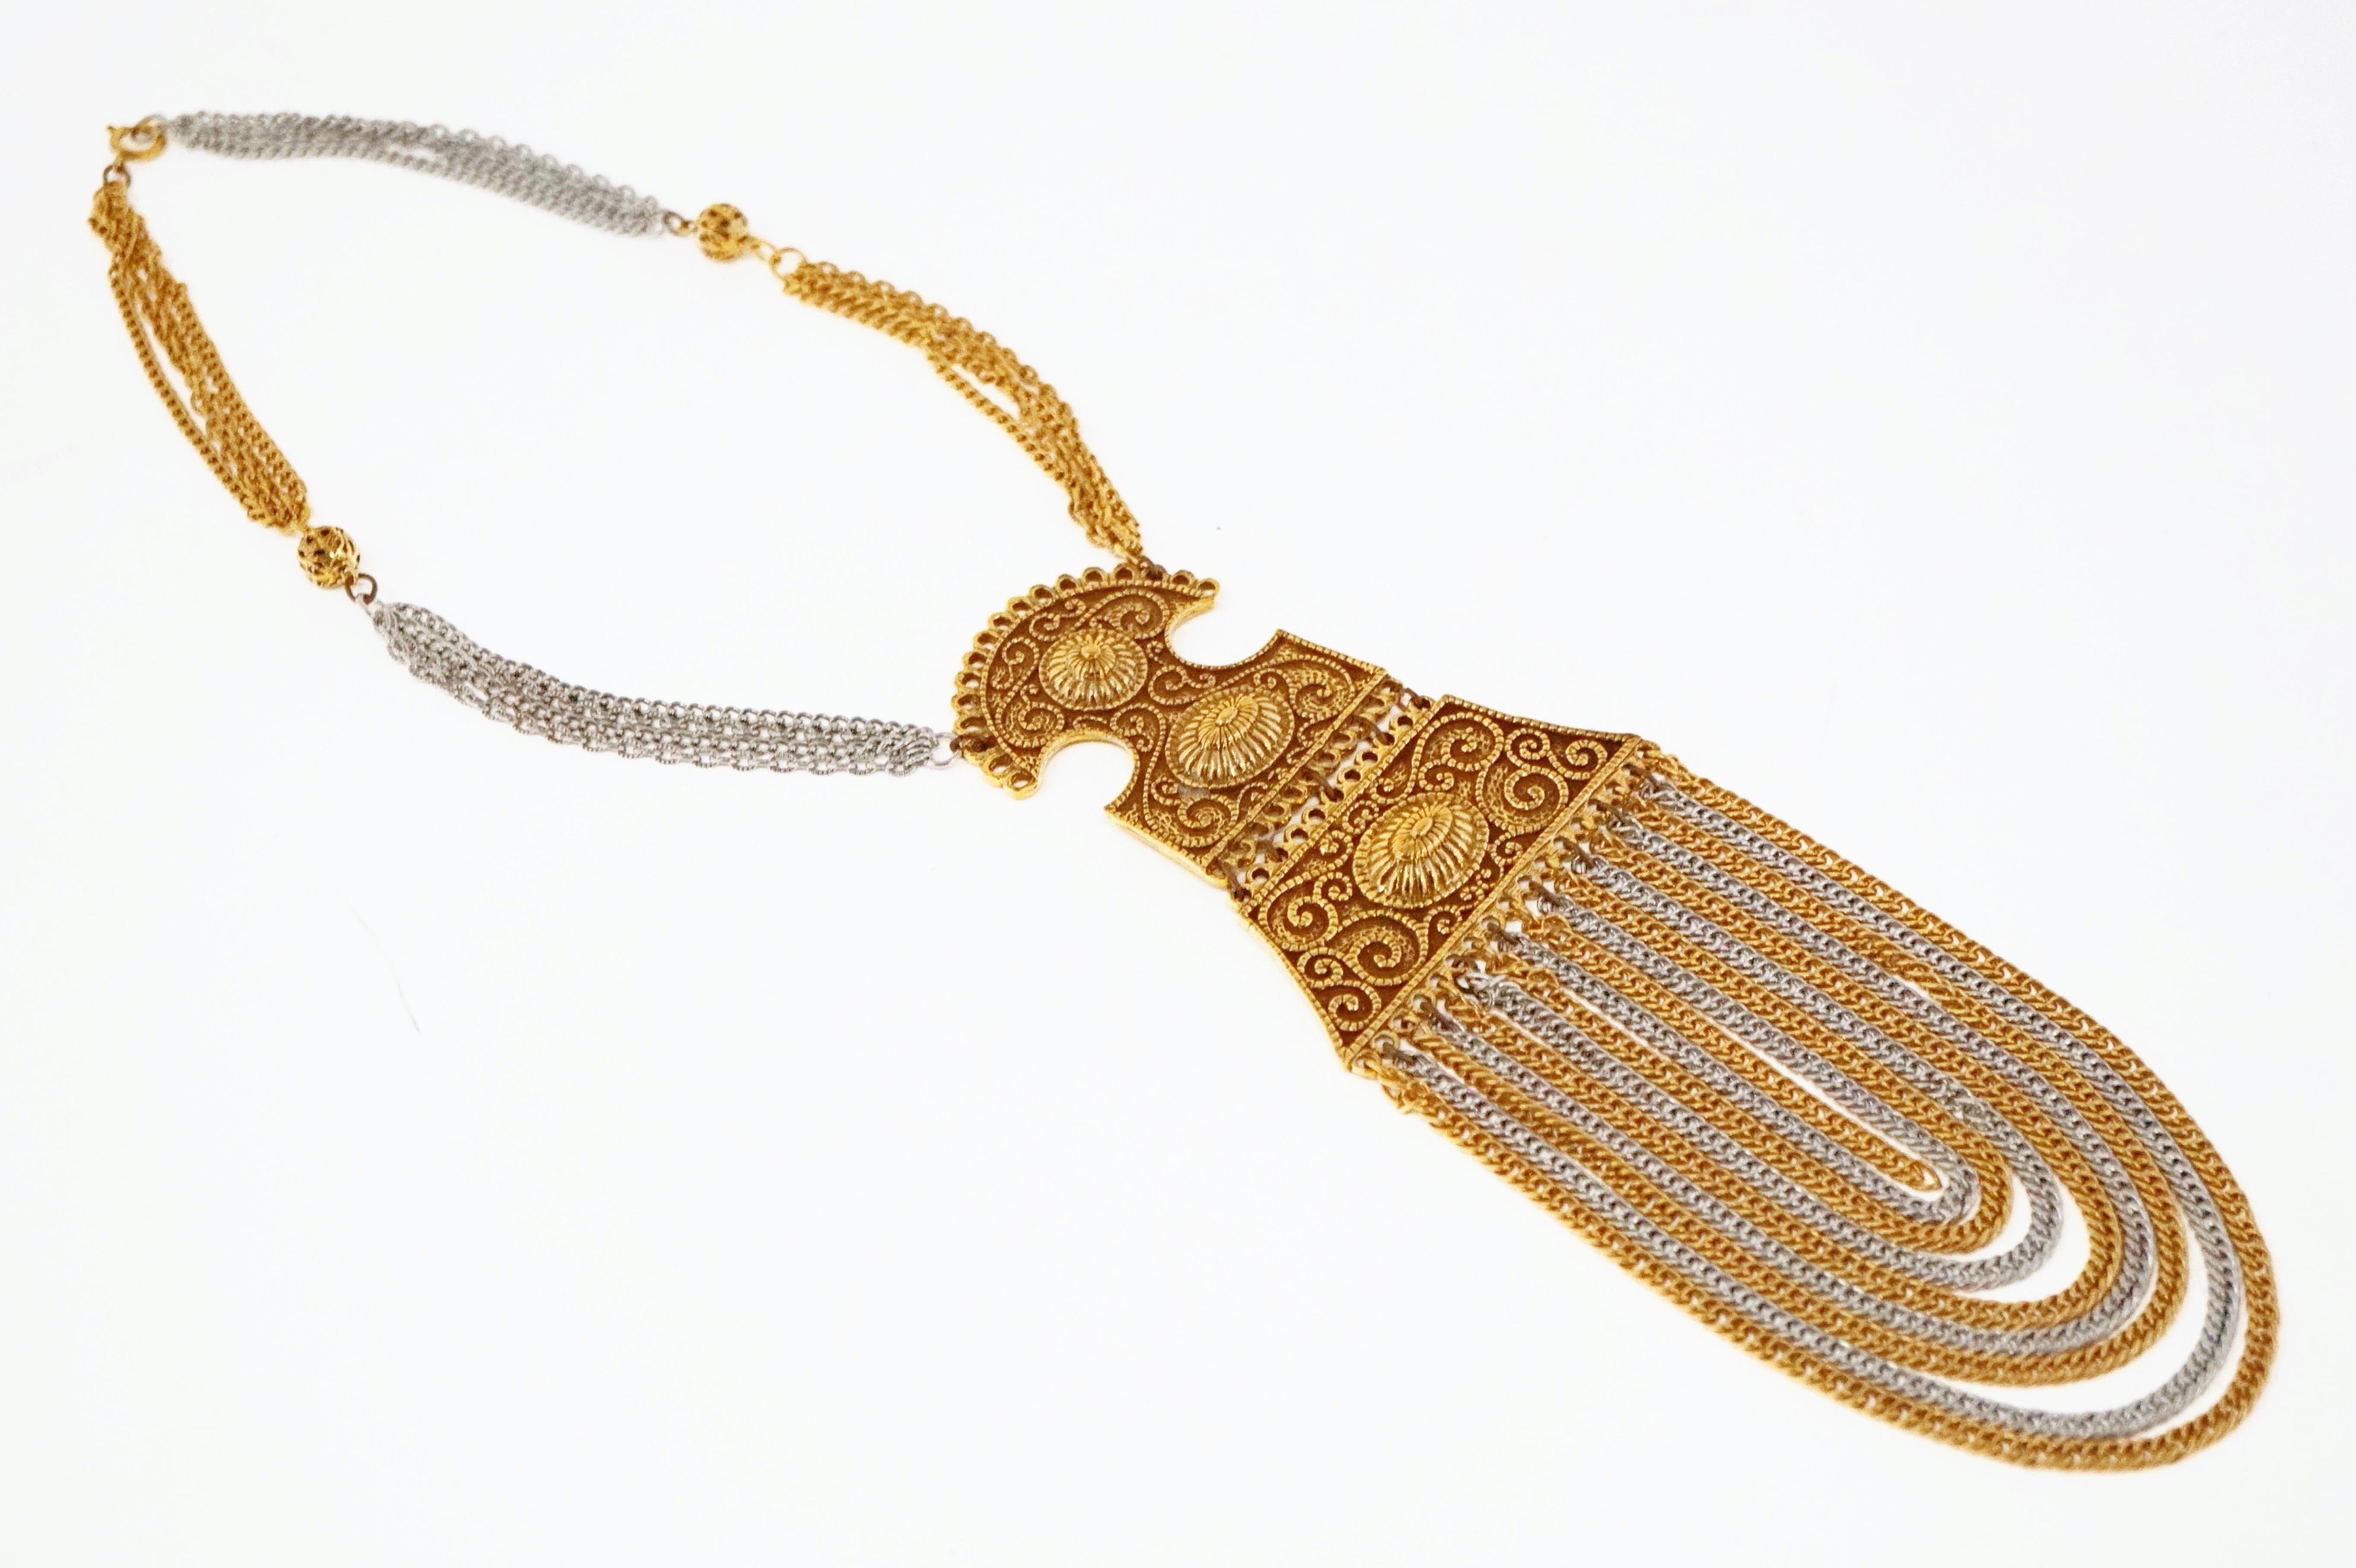 Vintage Goldette Etruscan Revival Chain Costume Statement Necklace, 1970s For Sale 1